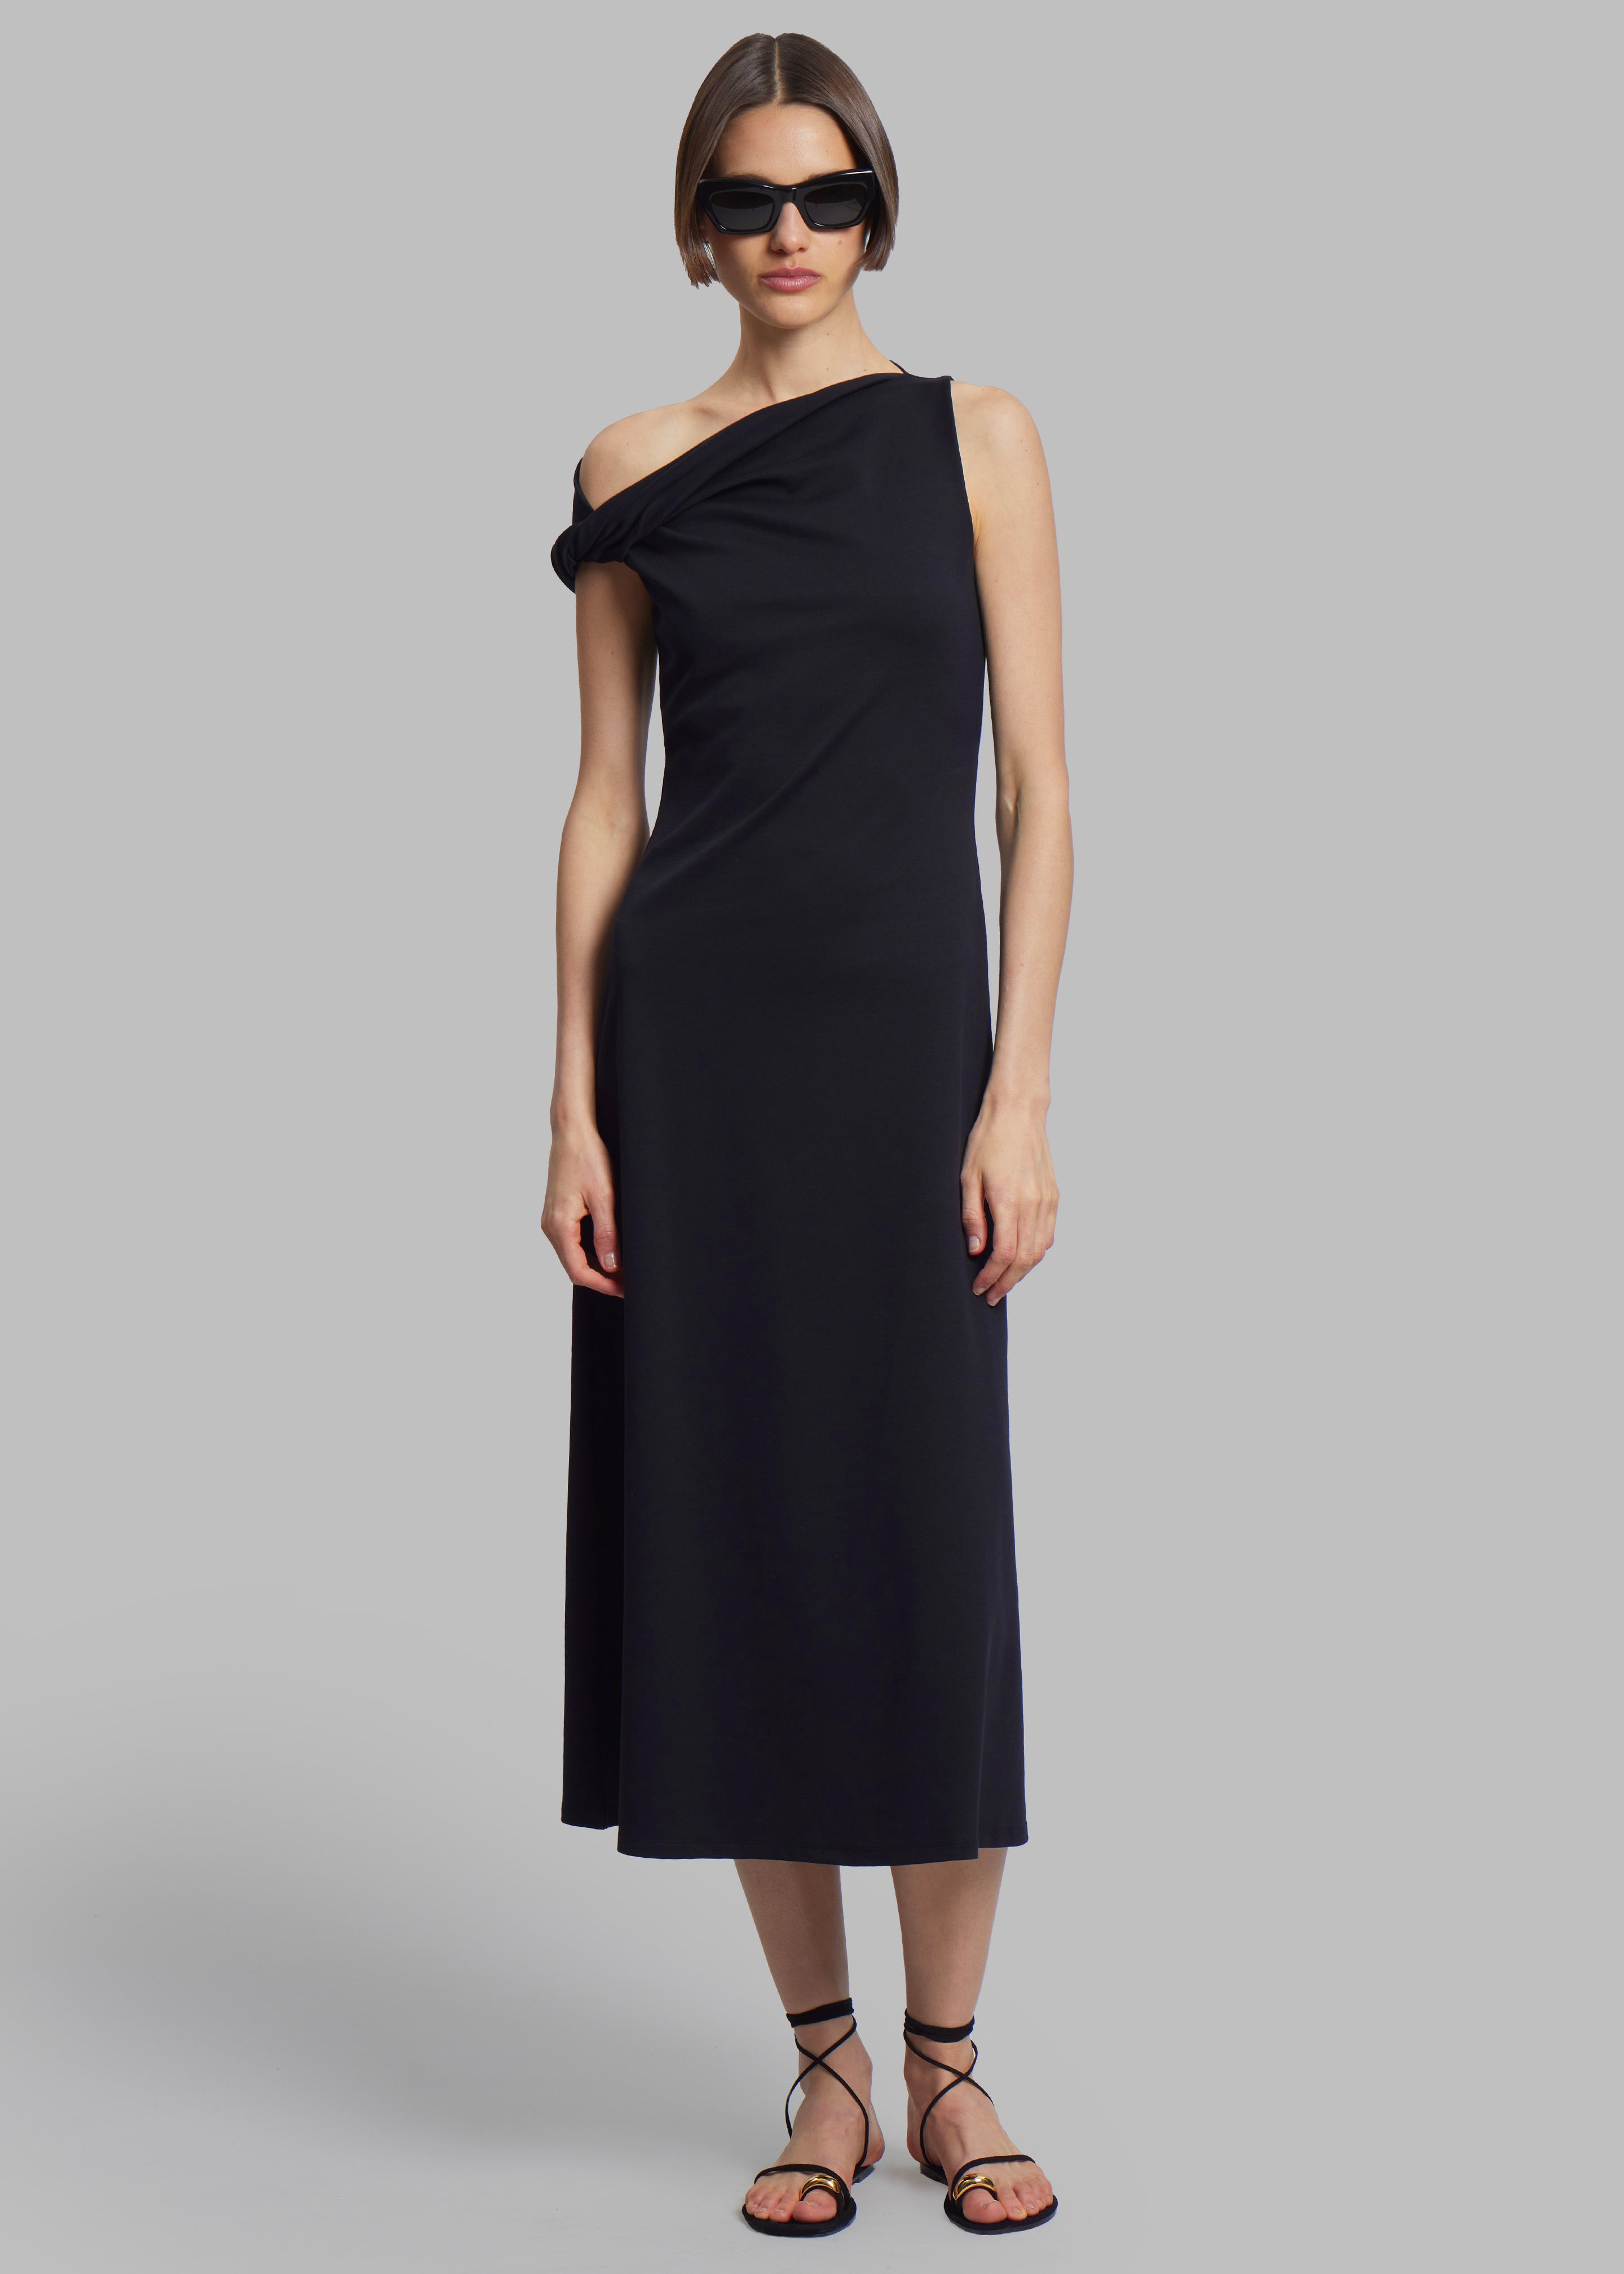 Beaufille Indi Dress - Black - 1